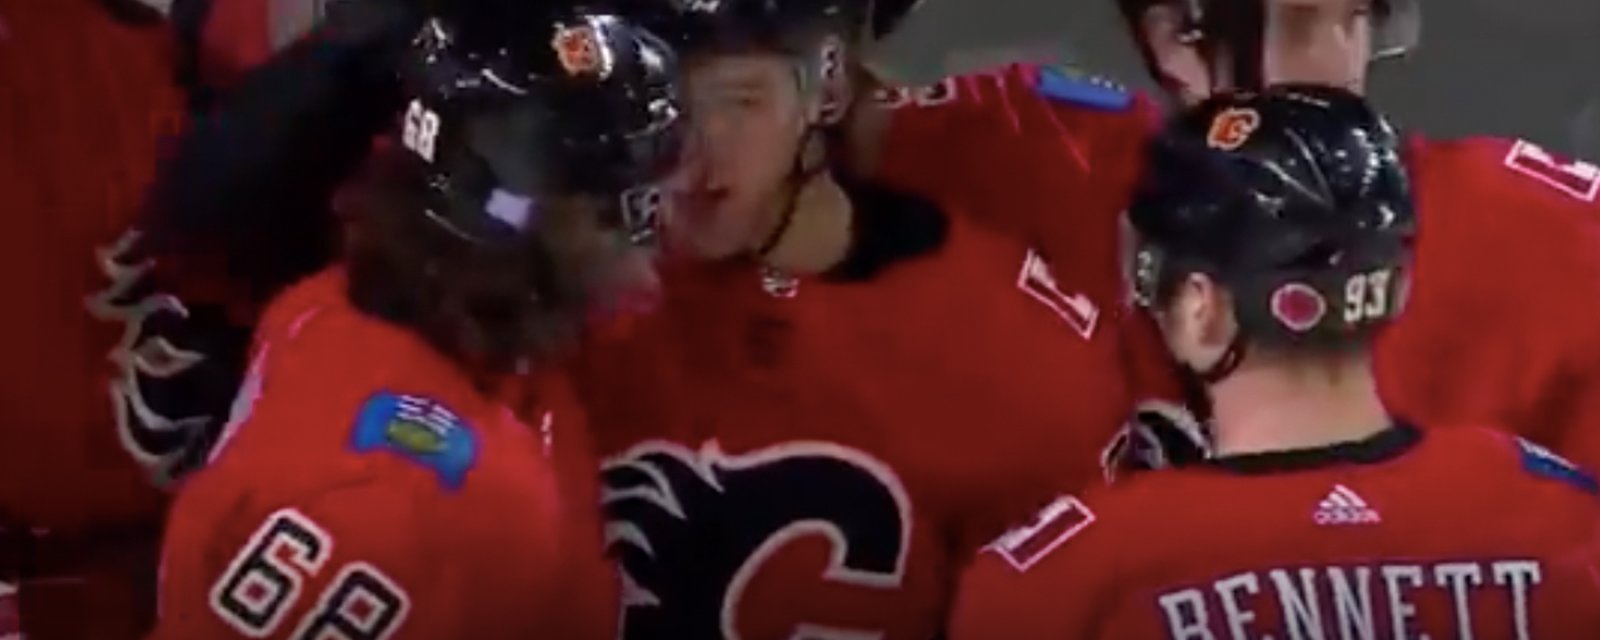 Must see: Watch Jankowski's 1st NHL goal!